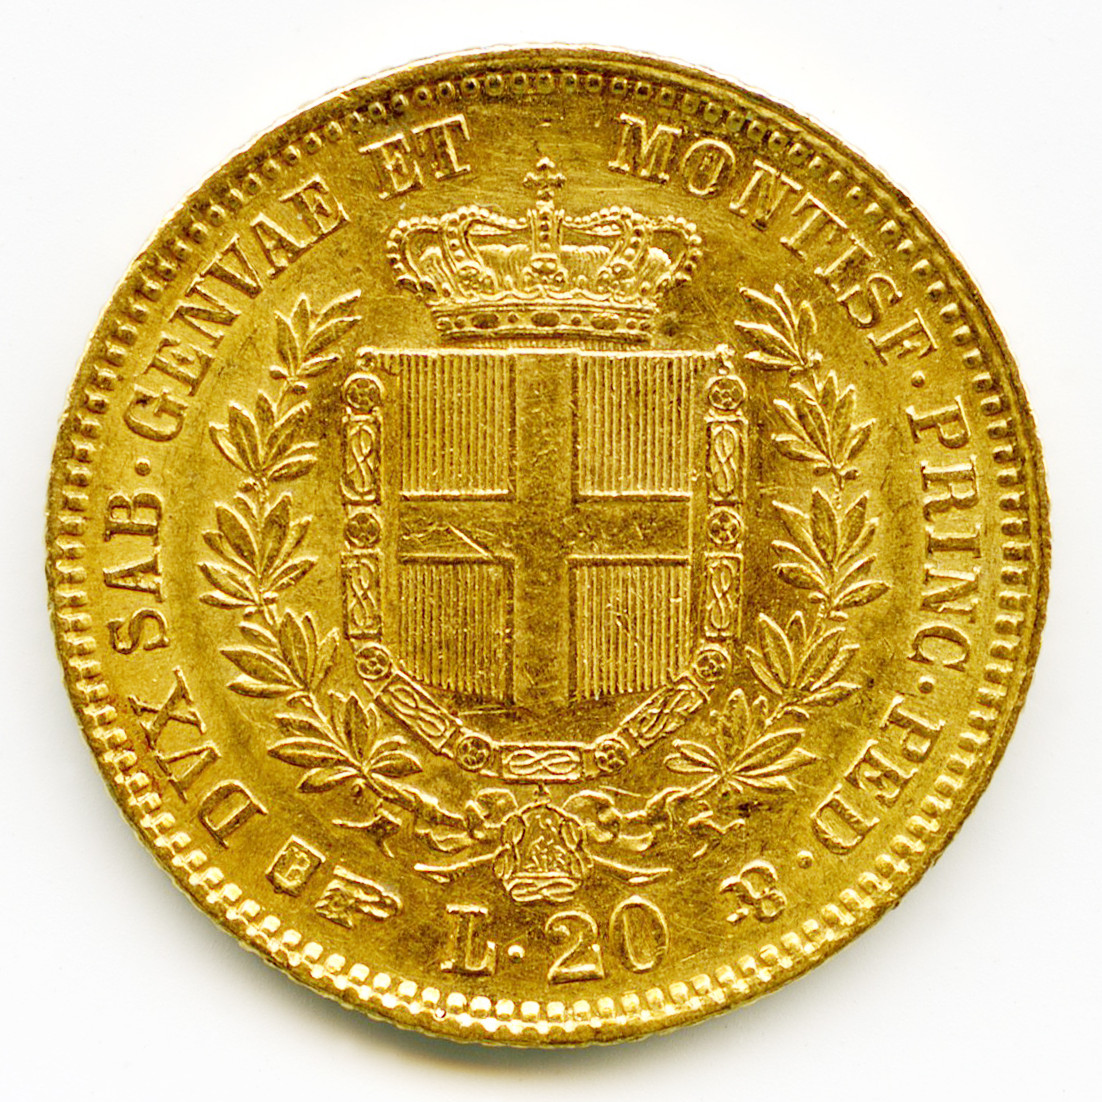 Italie - 20 Lire - 1855 Turin revers